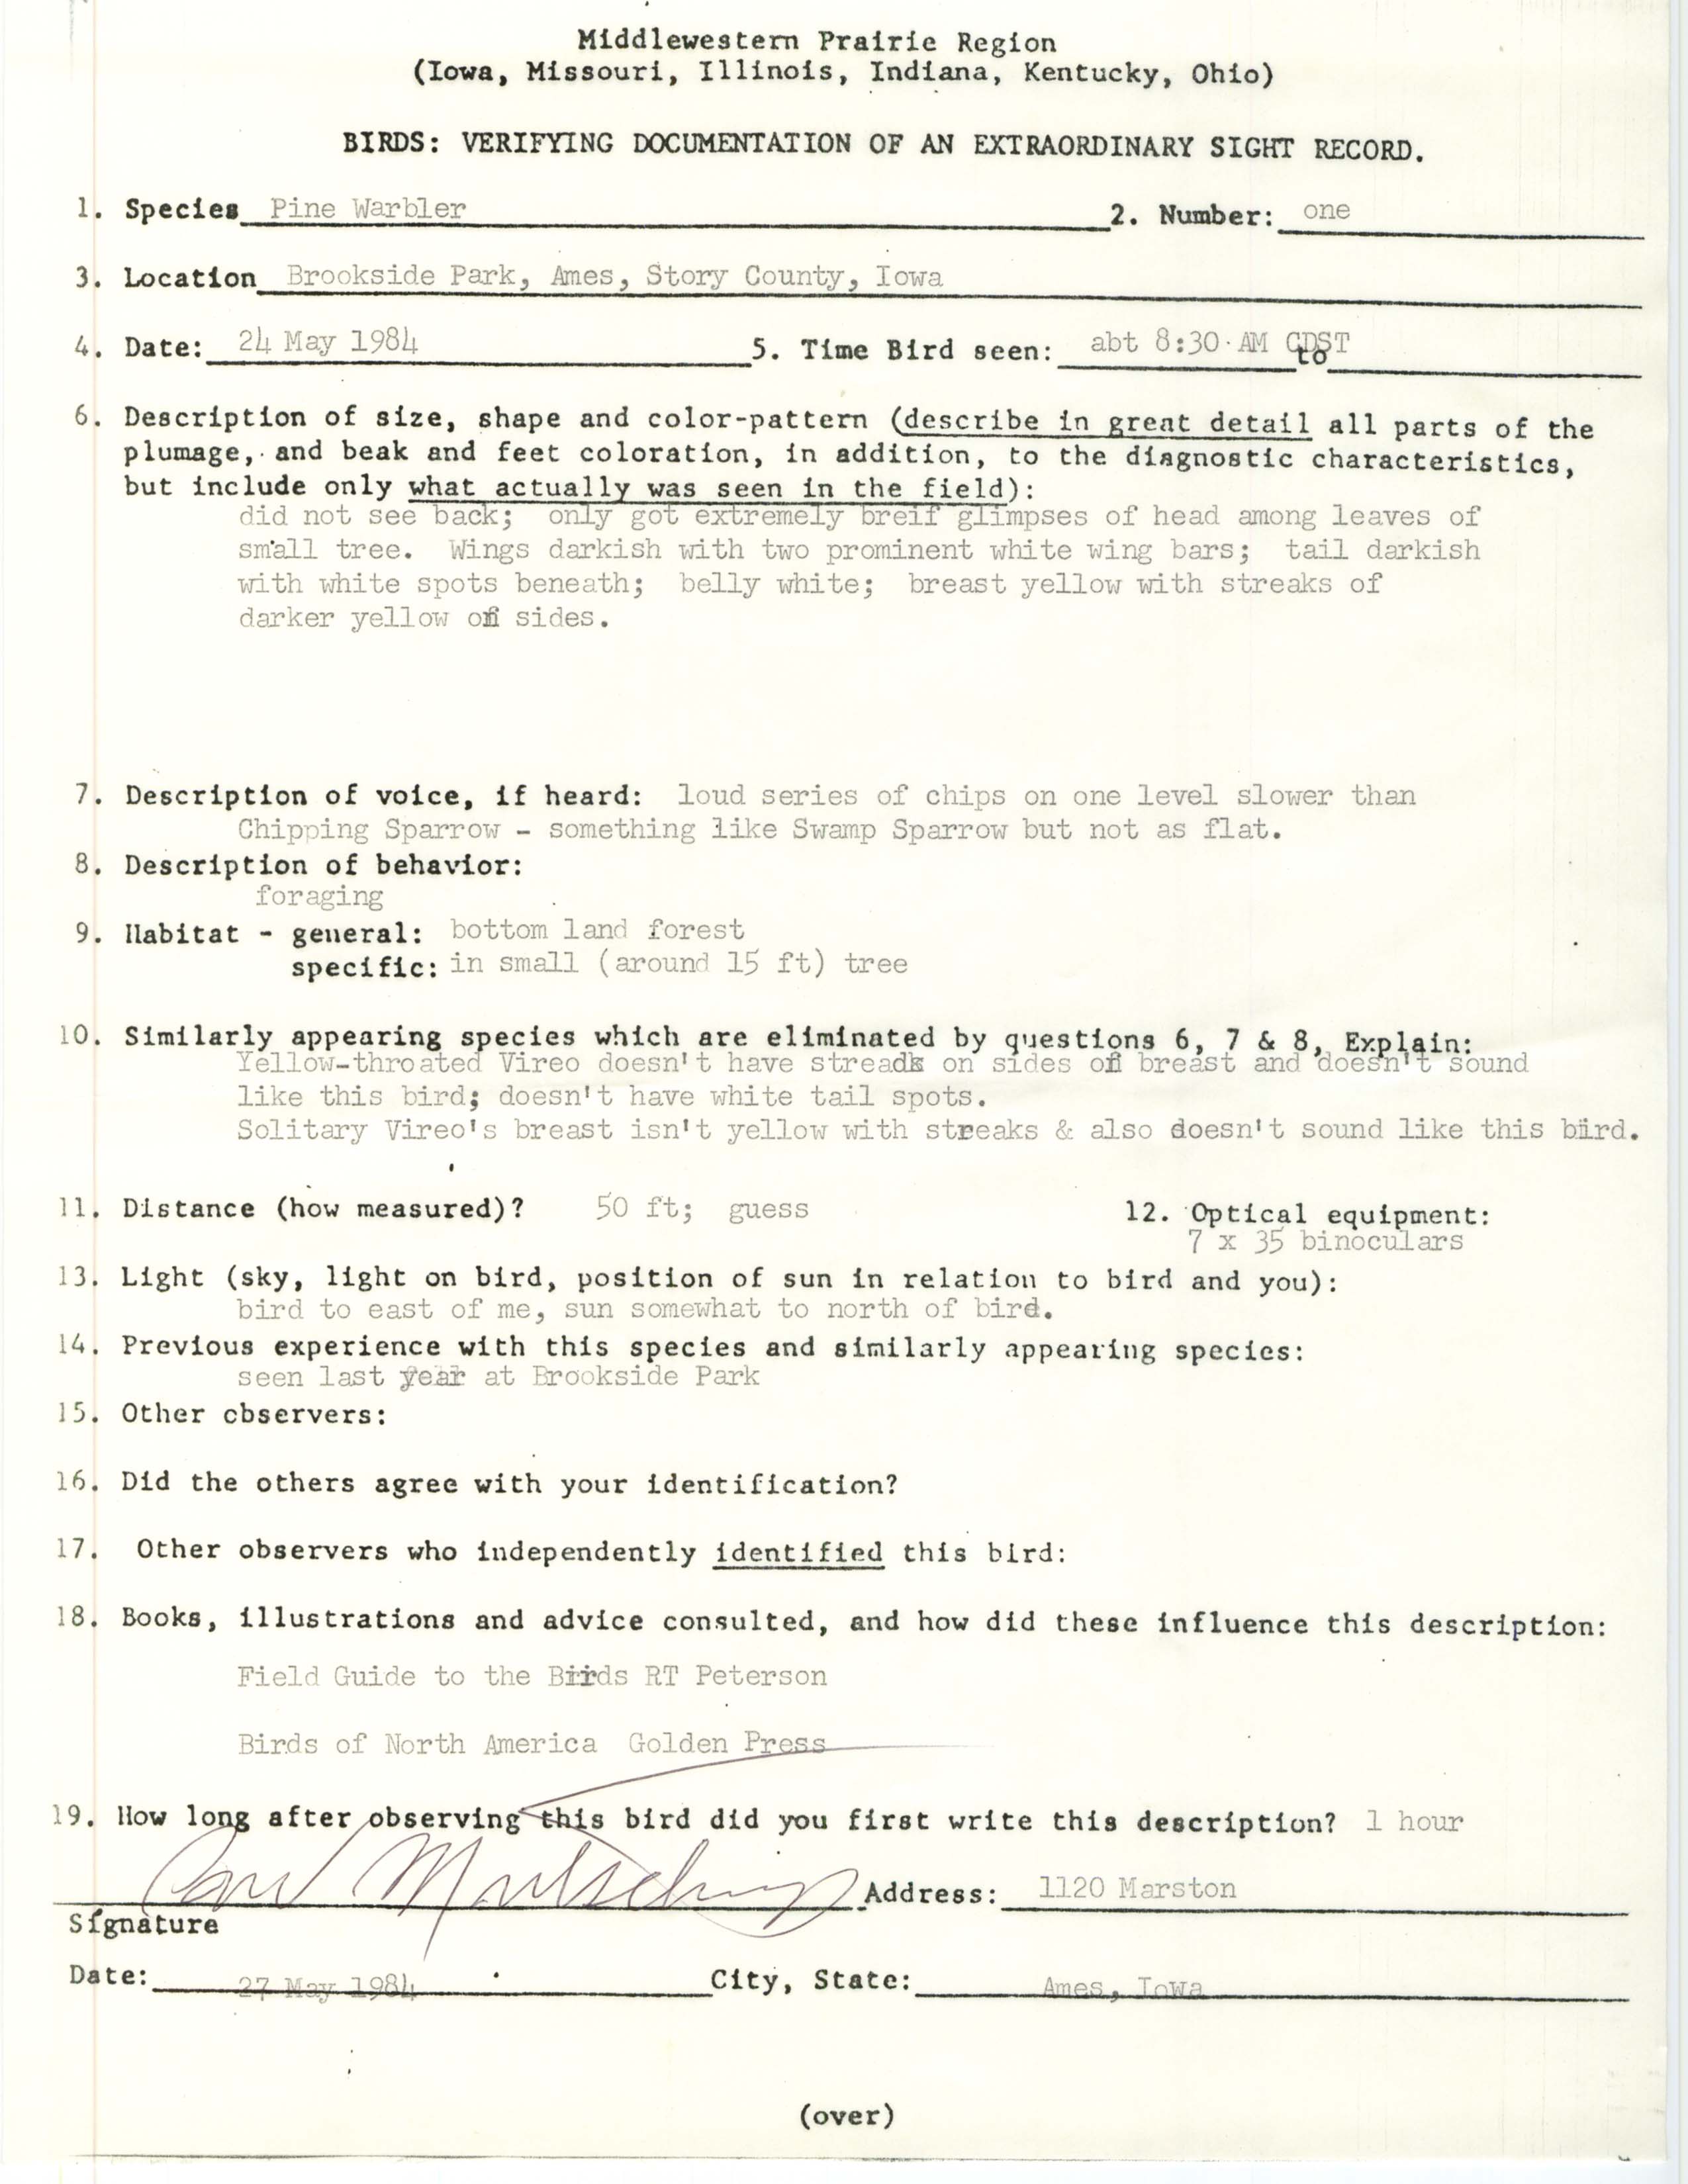 Rare bird documentation form for Pine Warbler at Brookside Park in Ames, 1984